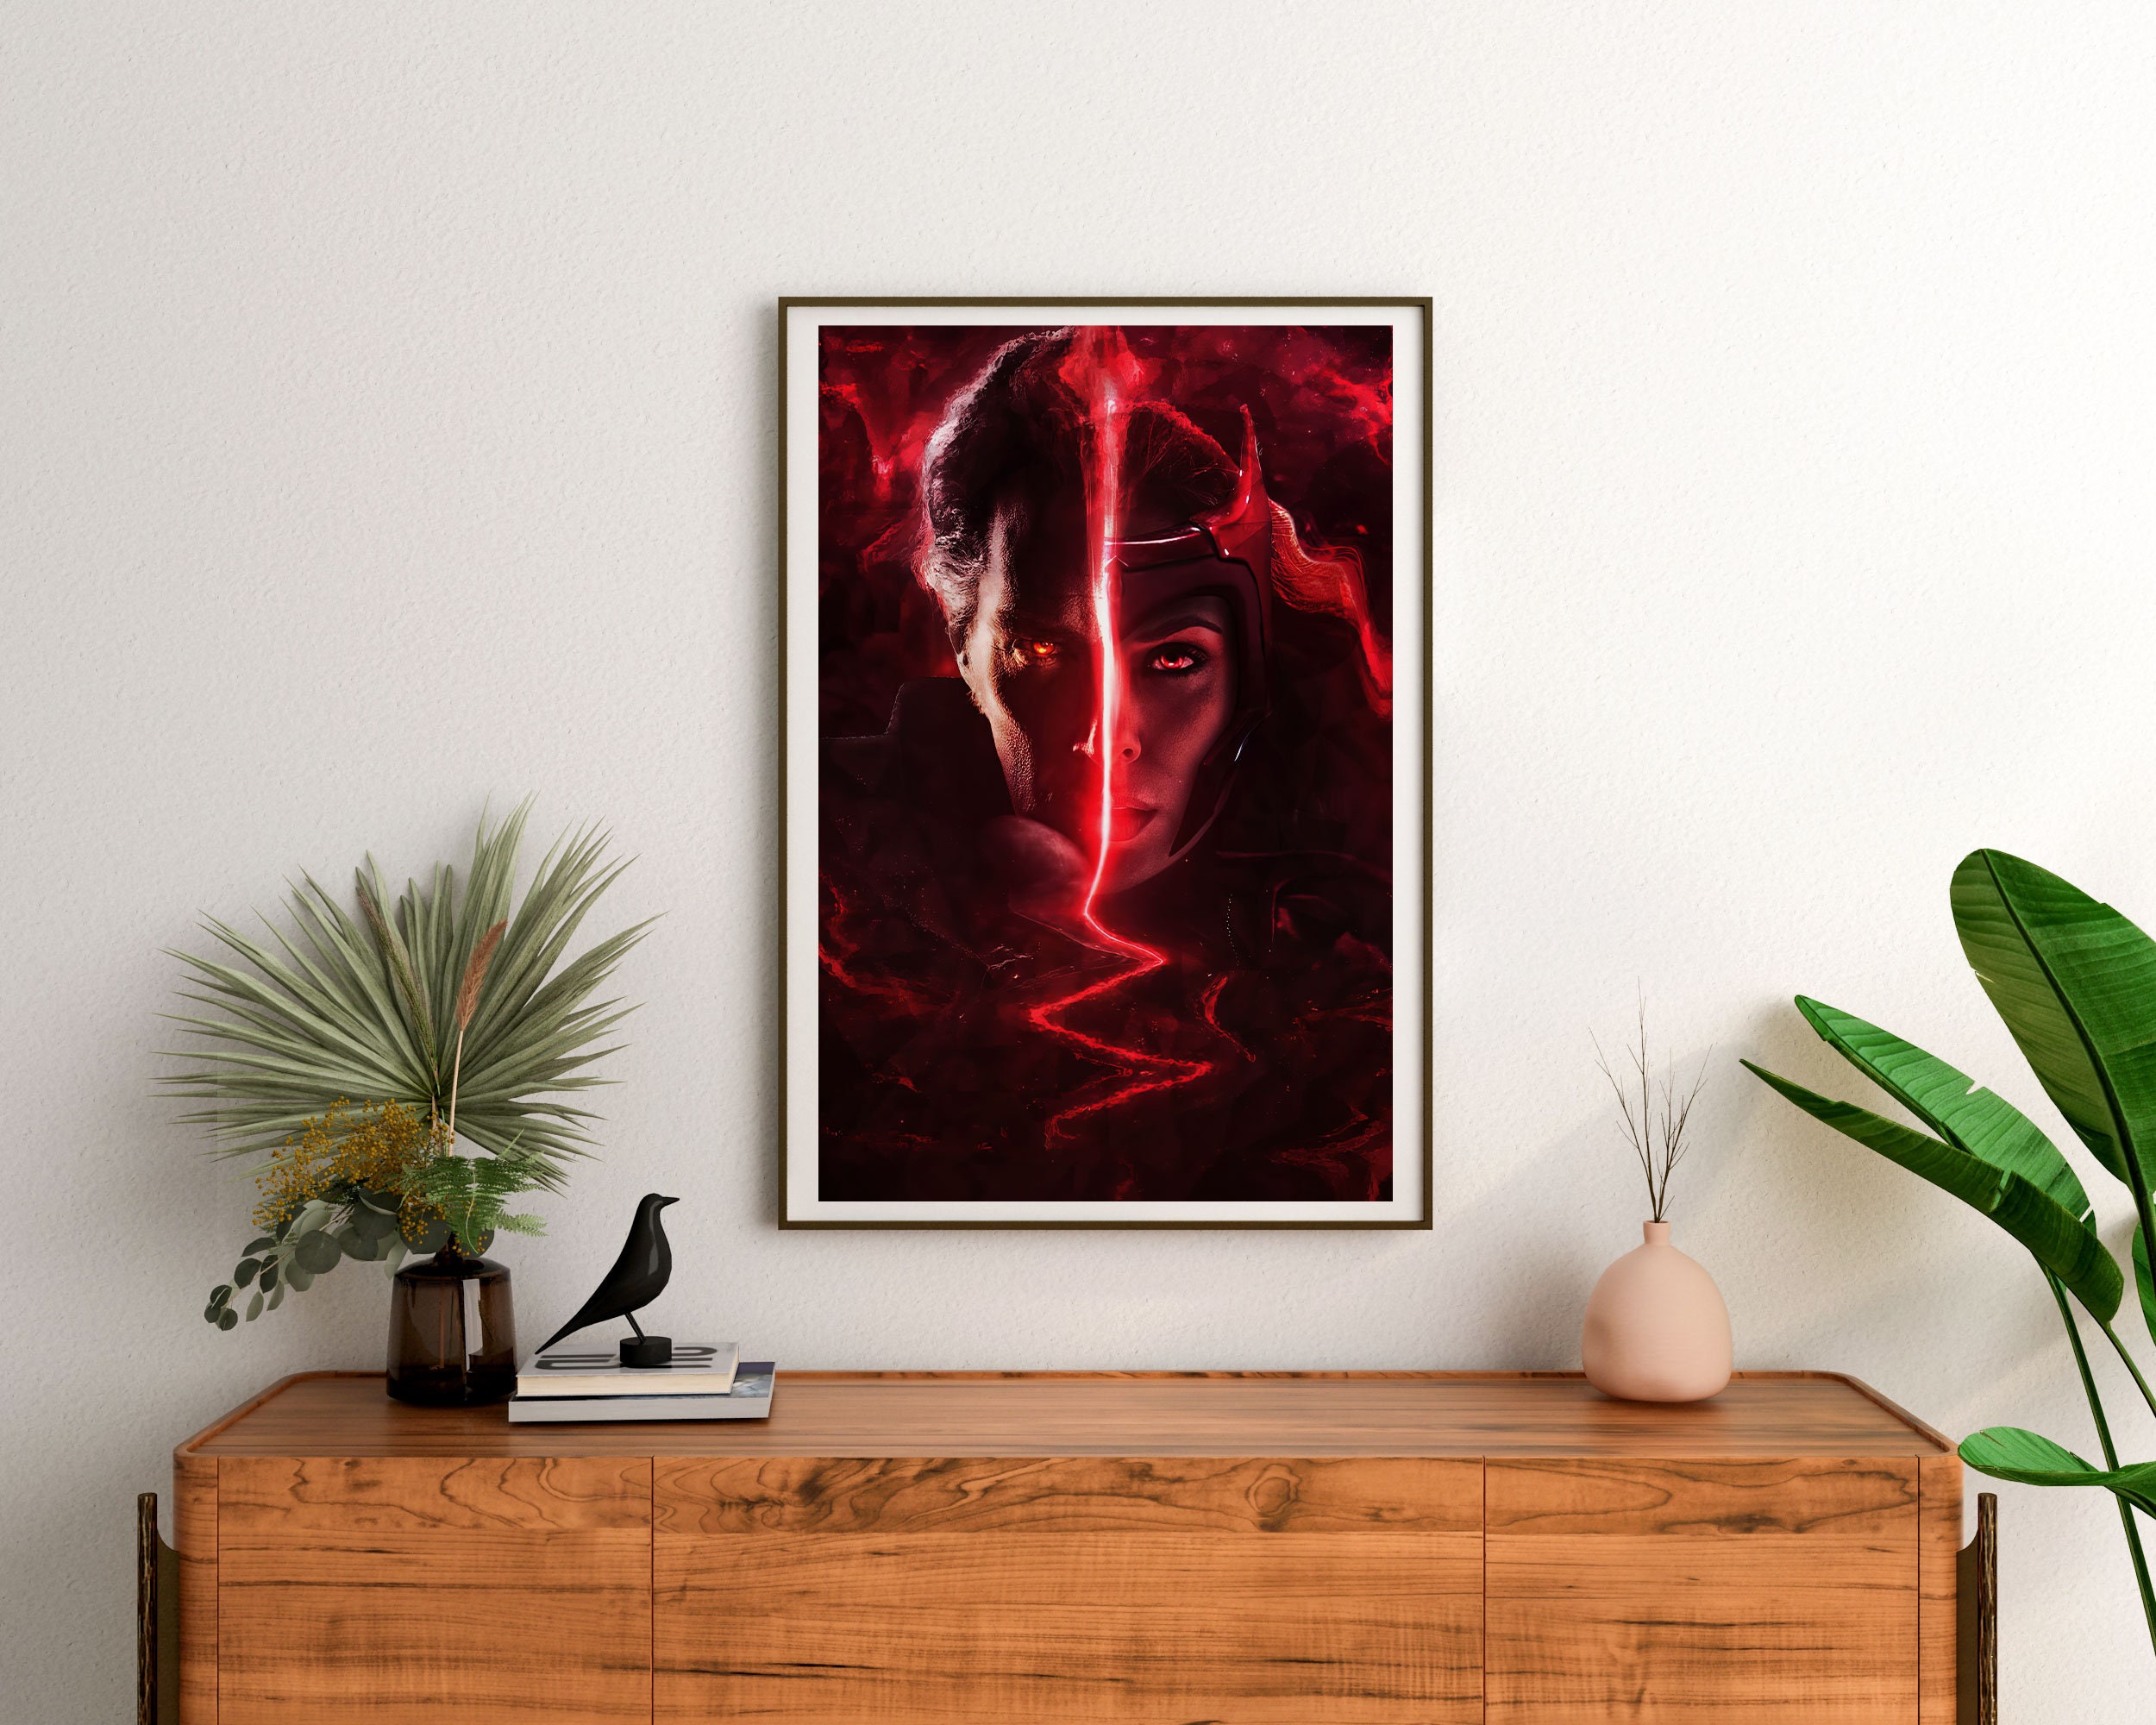 Wanda Maximoff Doctor Strange Multiverse Of Madness Poster Canvas